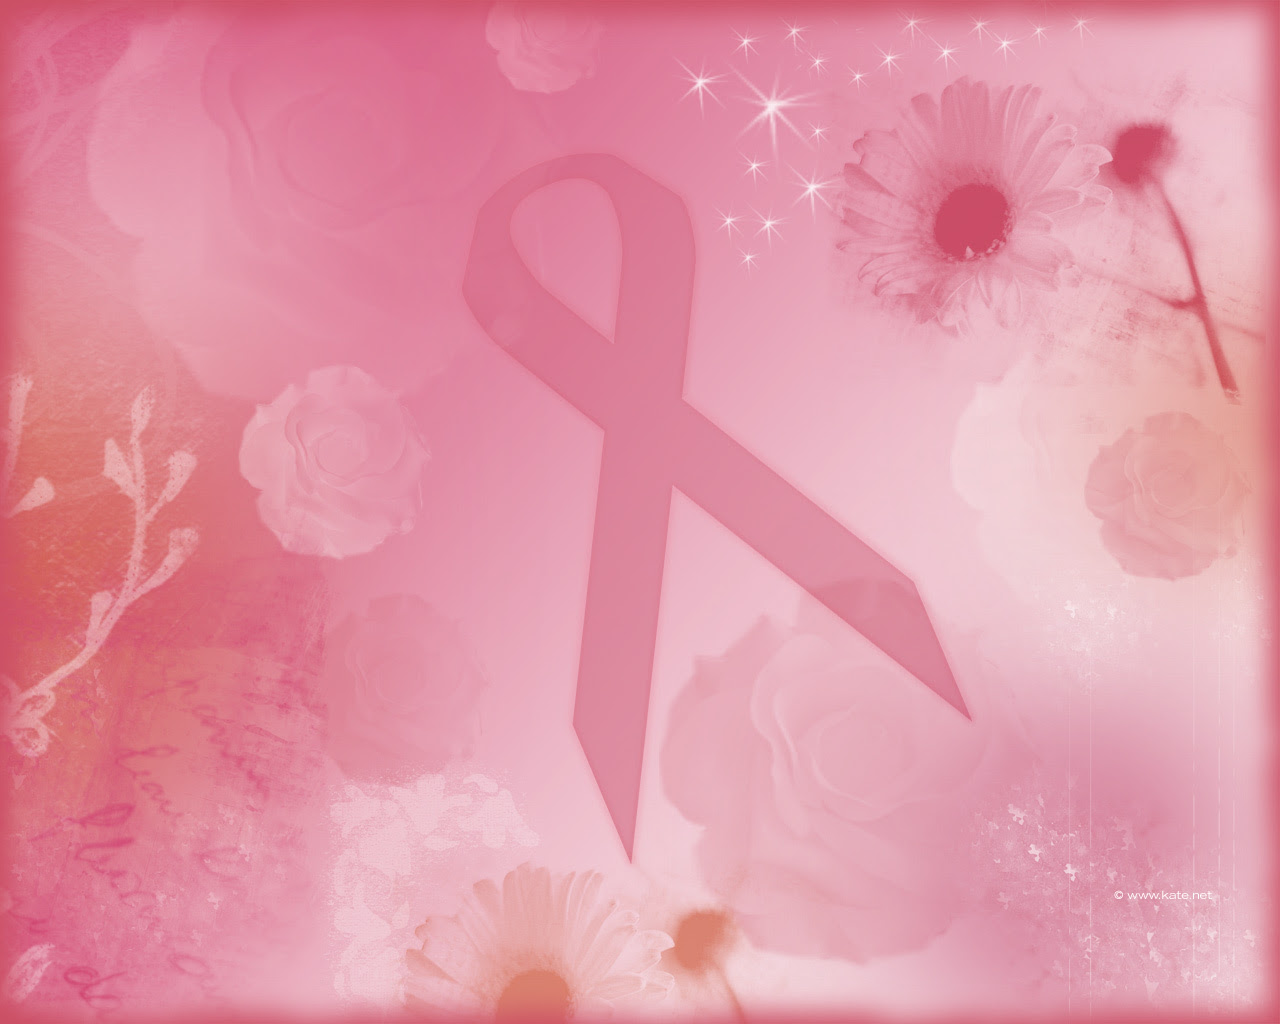 breast cancer Breast Cancer Awareness Wallpaper 7987041 Fanpop